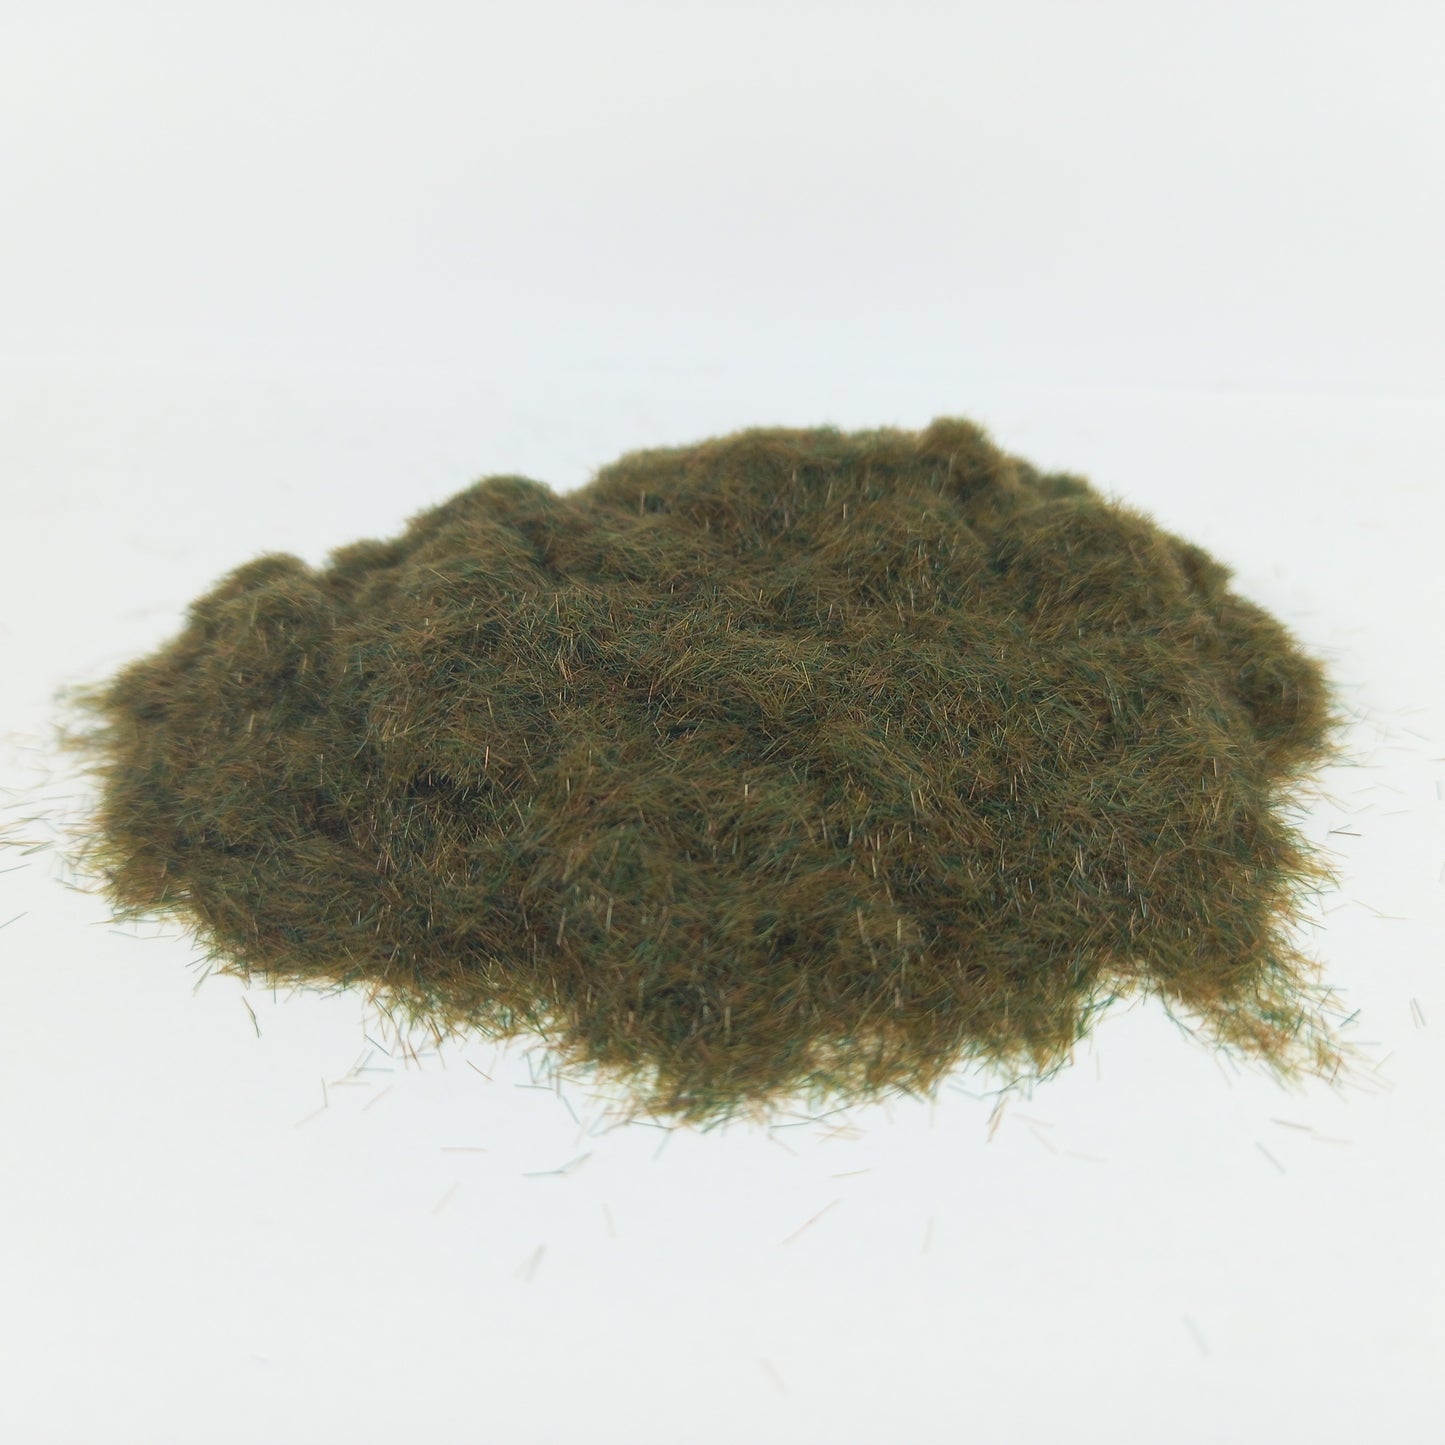 2mm  Muddy - Static Grass